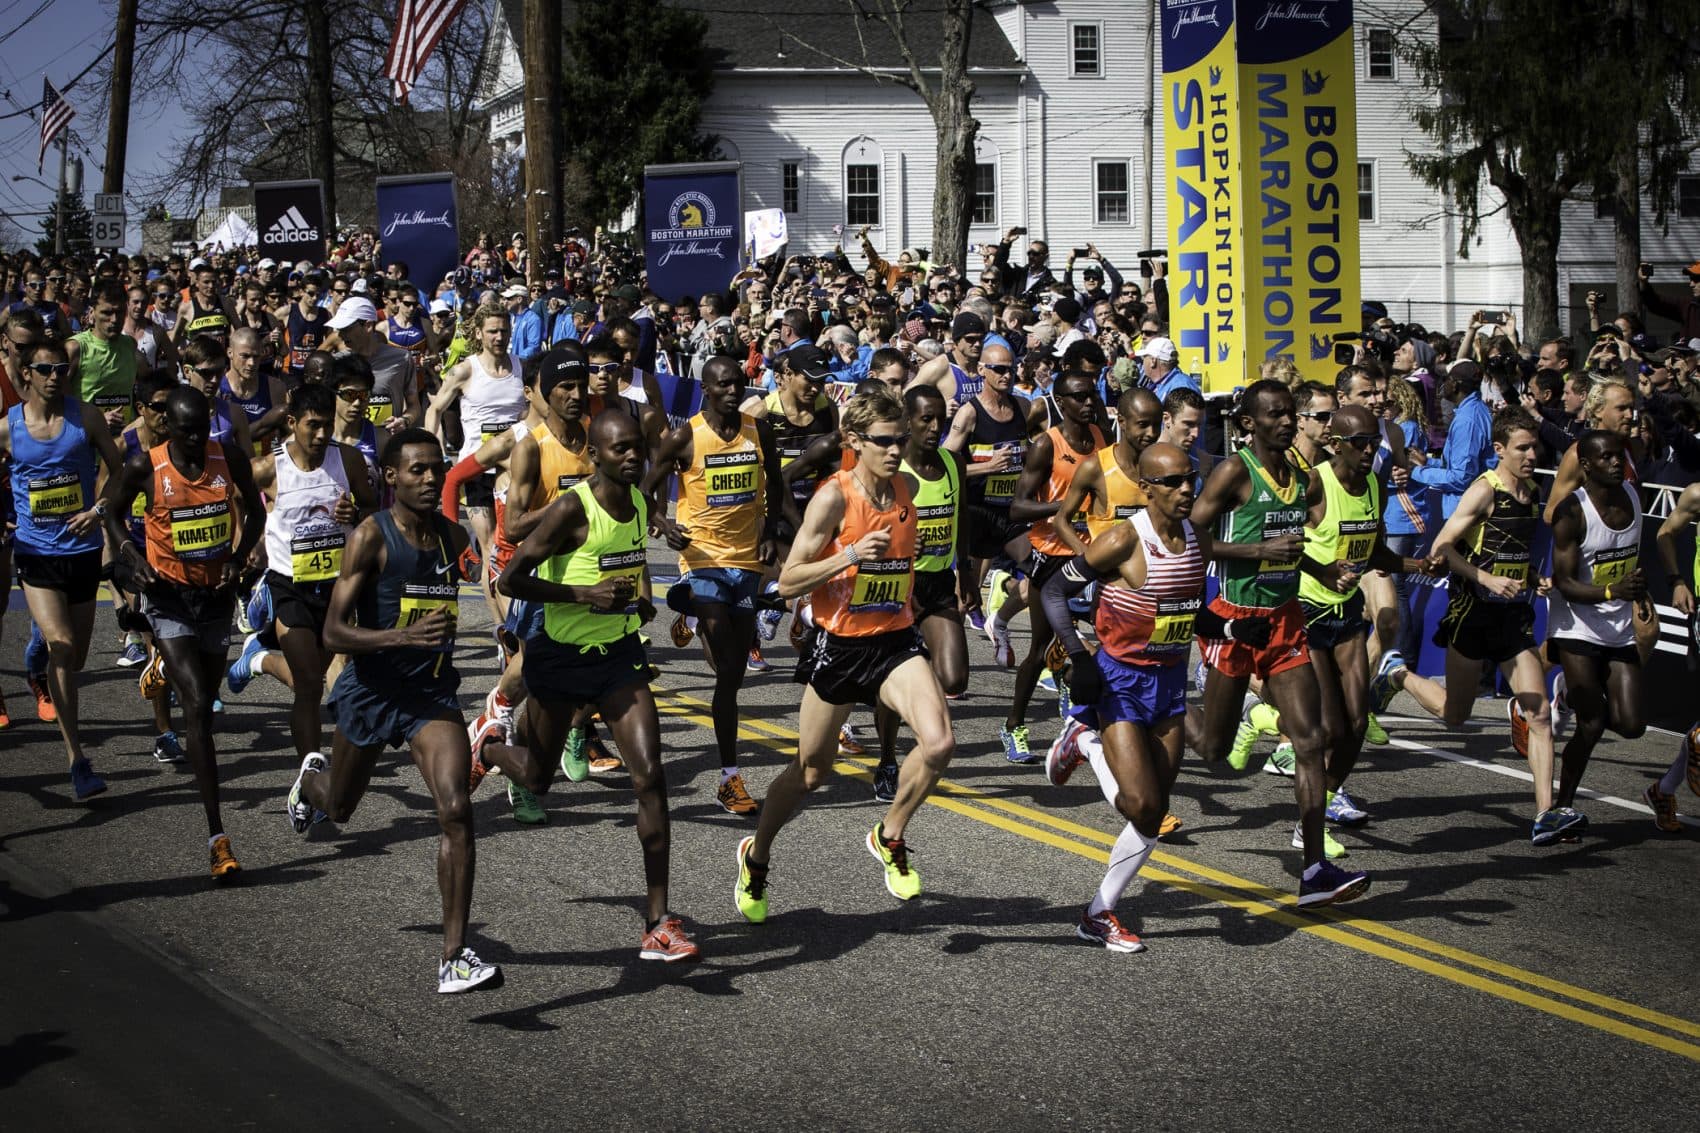 The men’s start of the 2014 Boston Marathon on April 21, 2014 in Hopkinton. (Courtesy Michael J. Lutch)